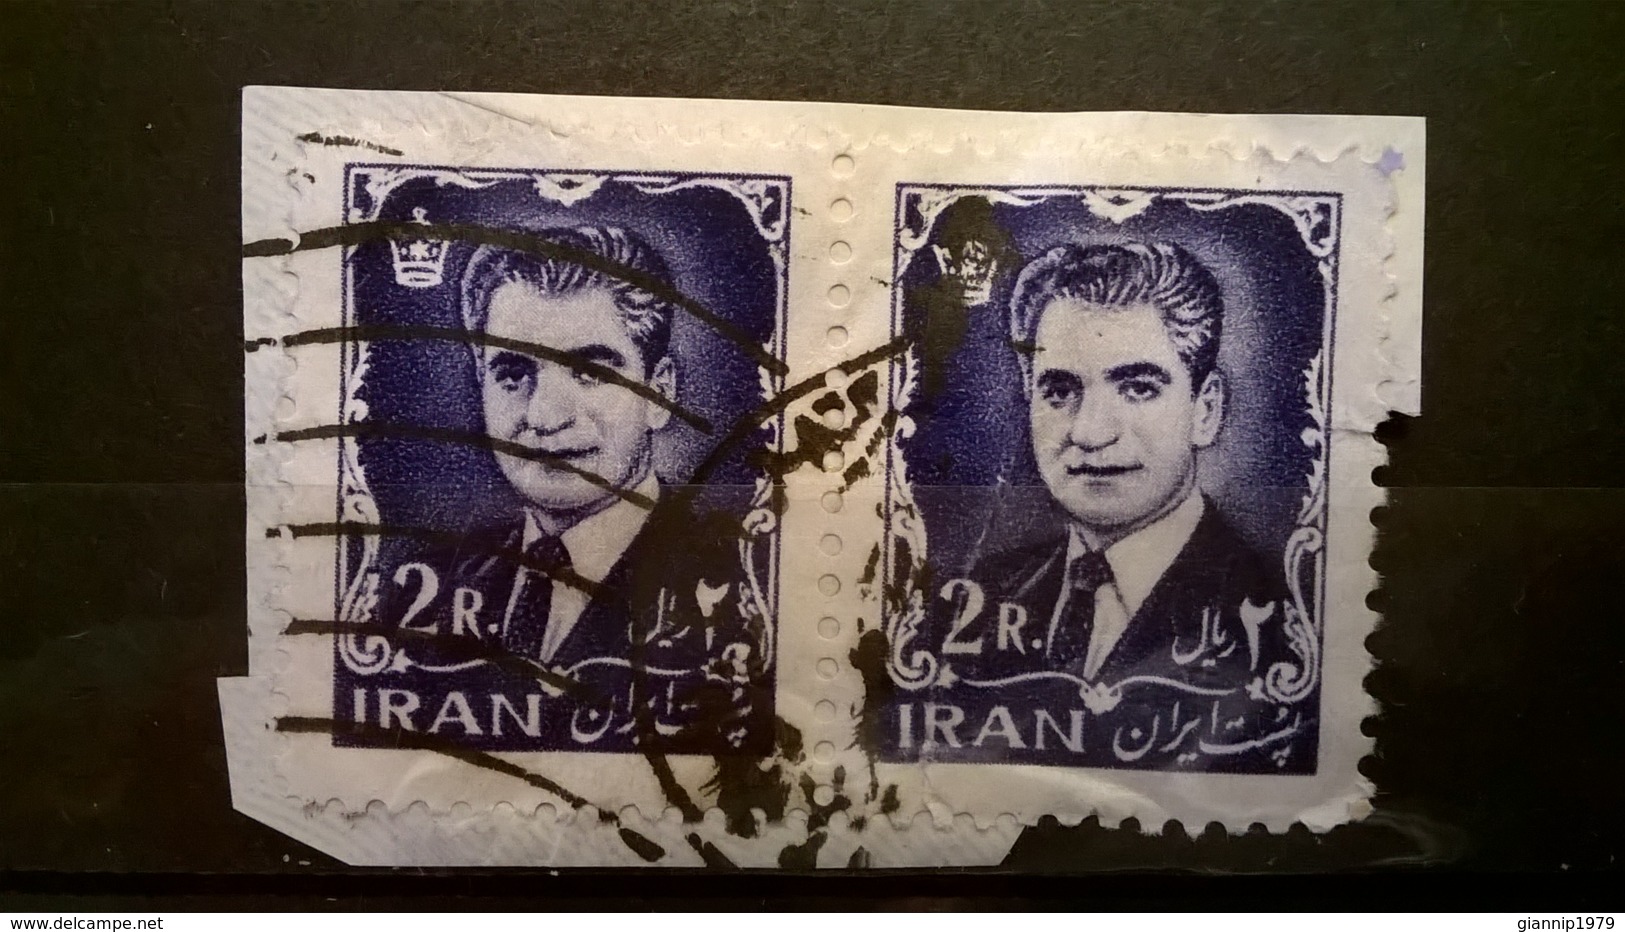 FRANCOBOLLI STAMPS IRAN 1962 USED SU FRAMMENTO MOHAMMAD REZA FRAGMENT - Iran